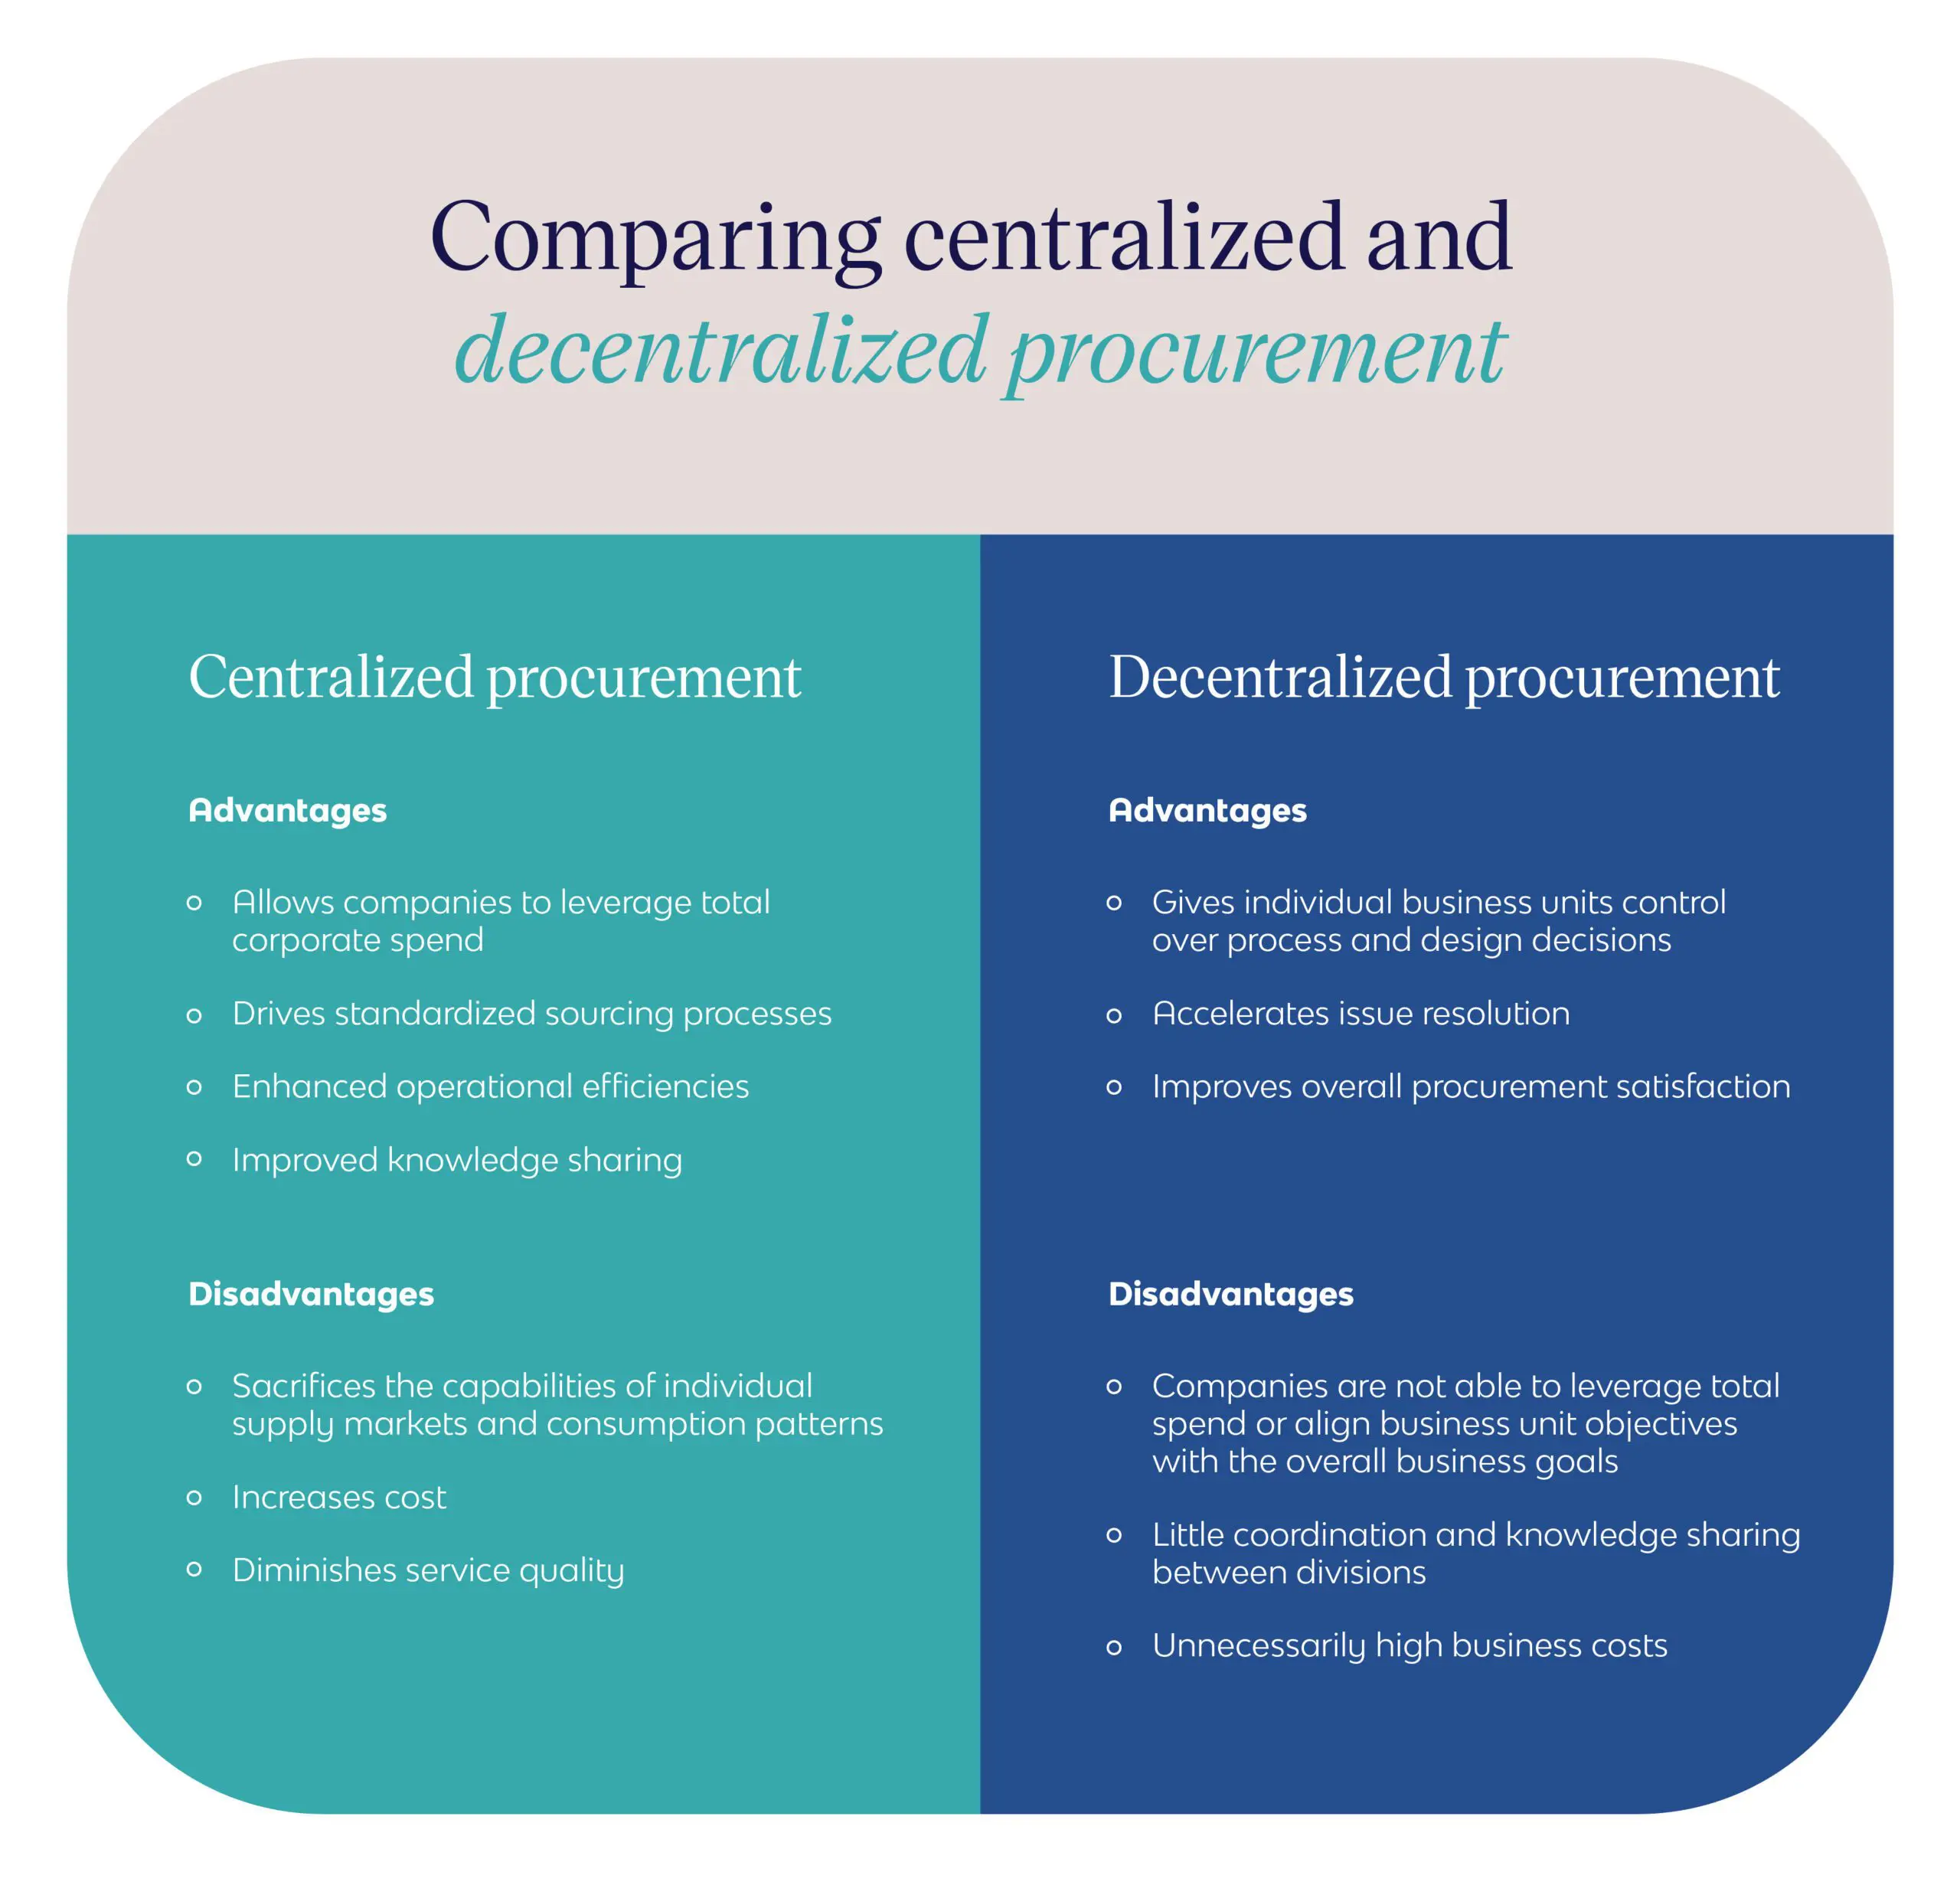 Comparison between the advantages and disadvantages of centralized and decentralized procurement.